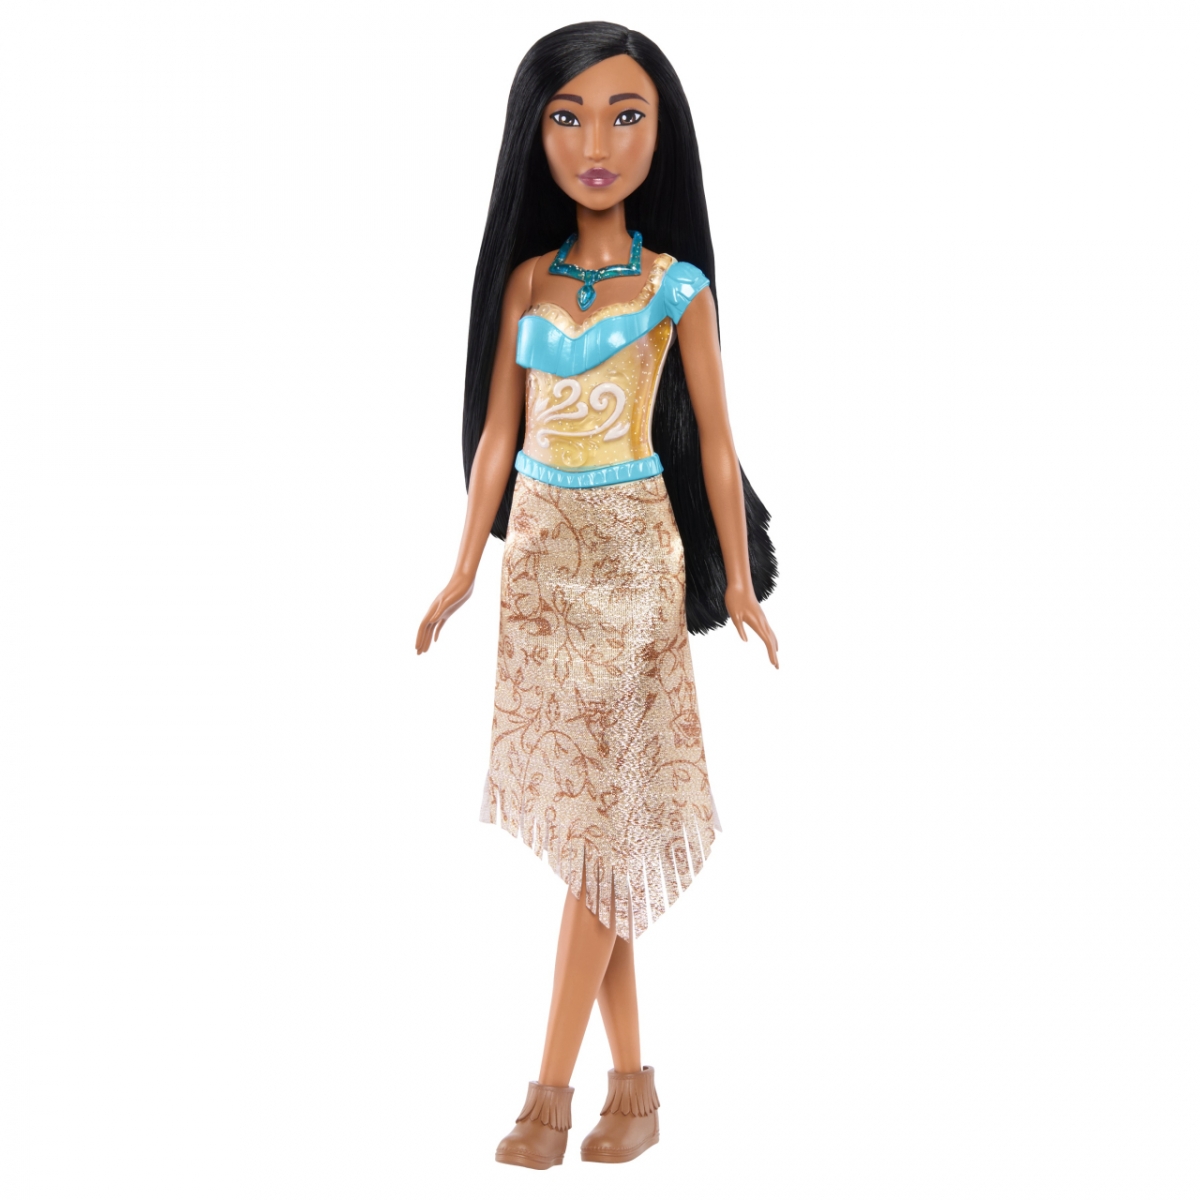 Disney Princess Fashion Core Doll Asst. Pochaontas Lelle HLW07